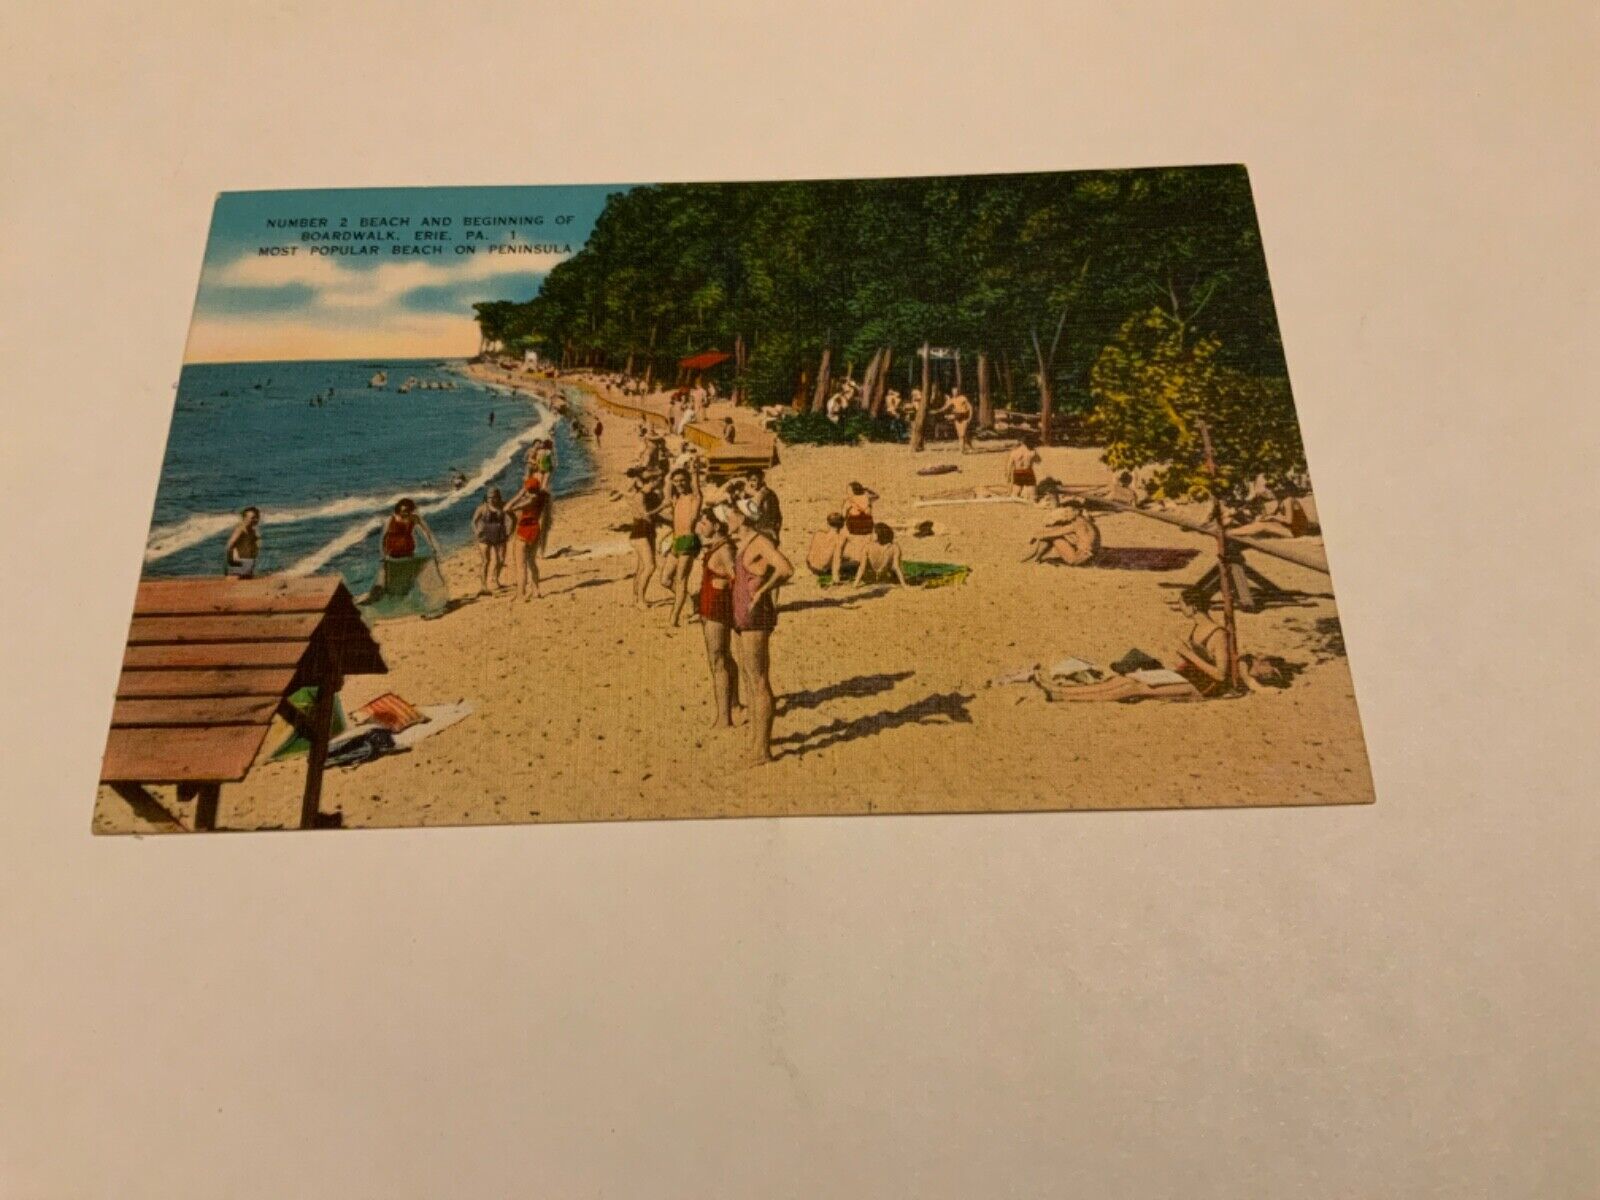 Erie, PA. ~ No. 2 Beach and Boardwalk Peninsula Popular Beach - Vintage Postcard